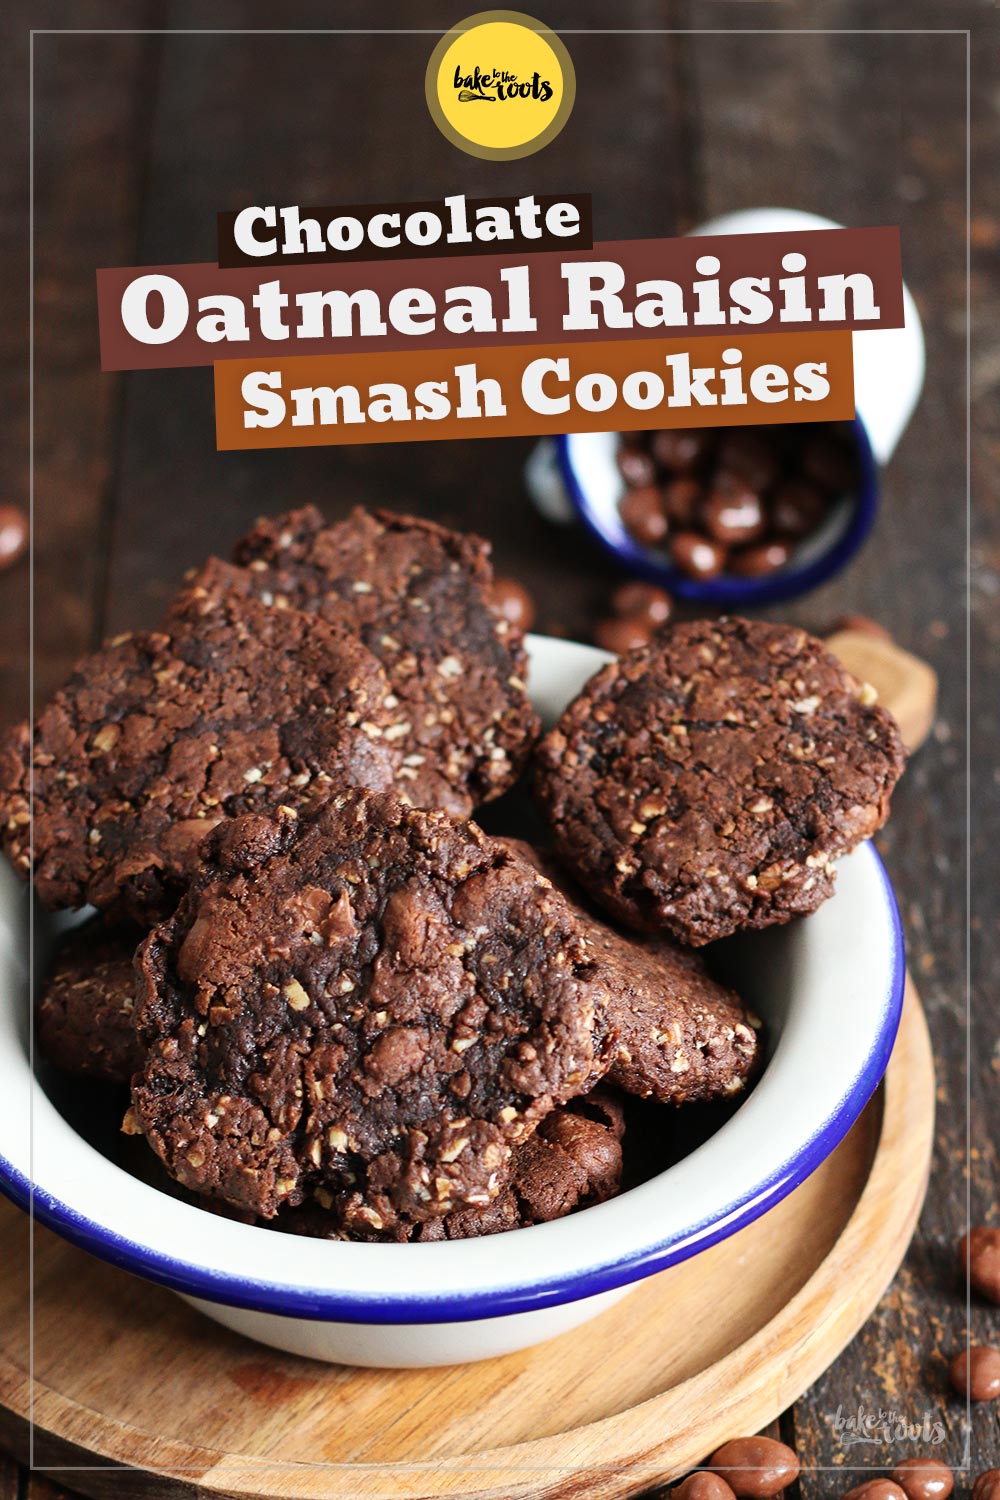 Chocolate Oatmeal Raisin "Smash" Cookies | Bake to the roots